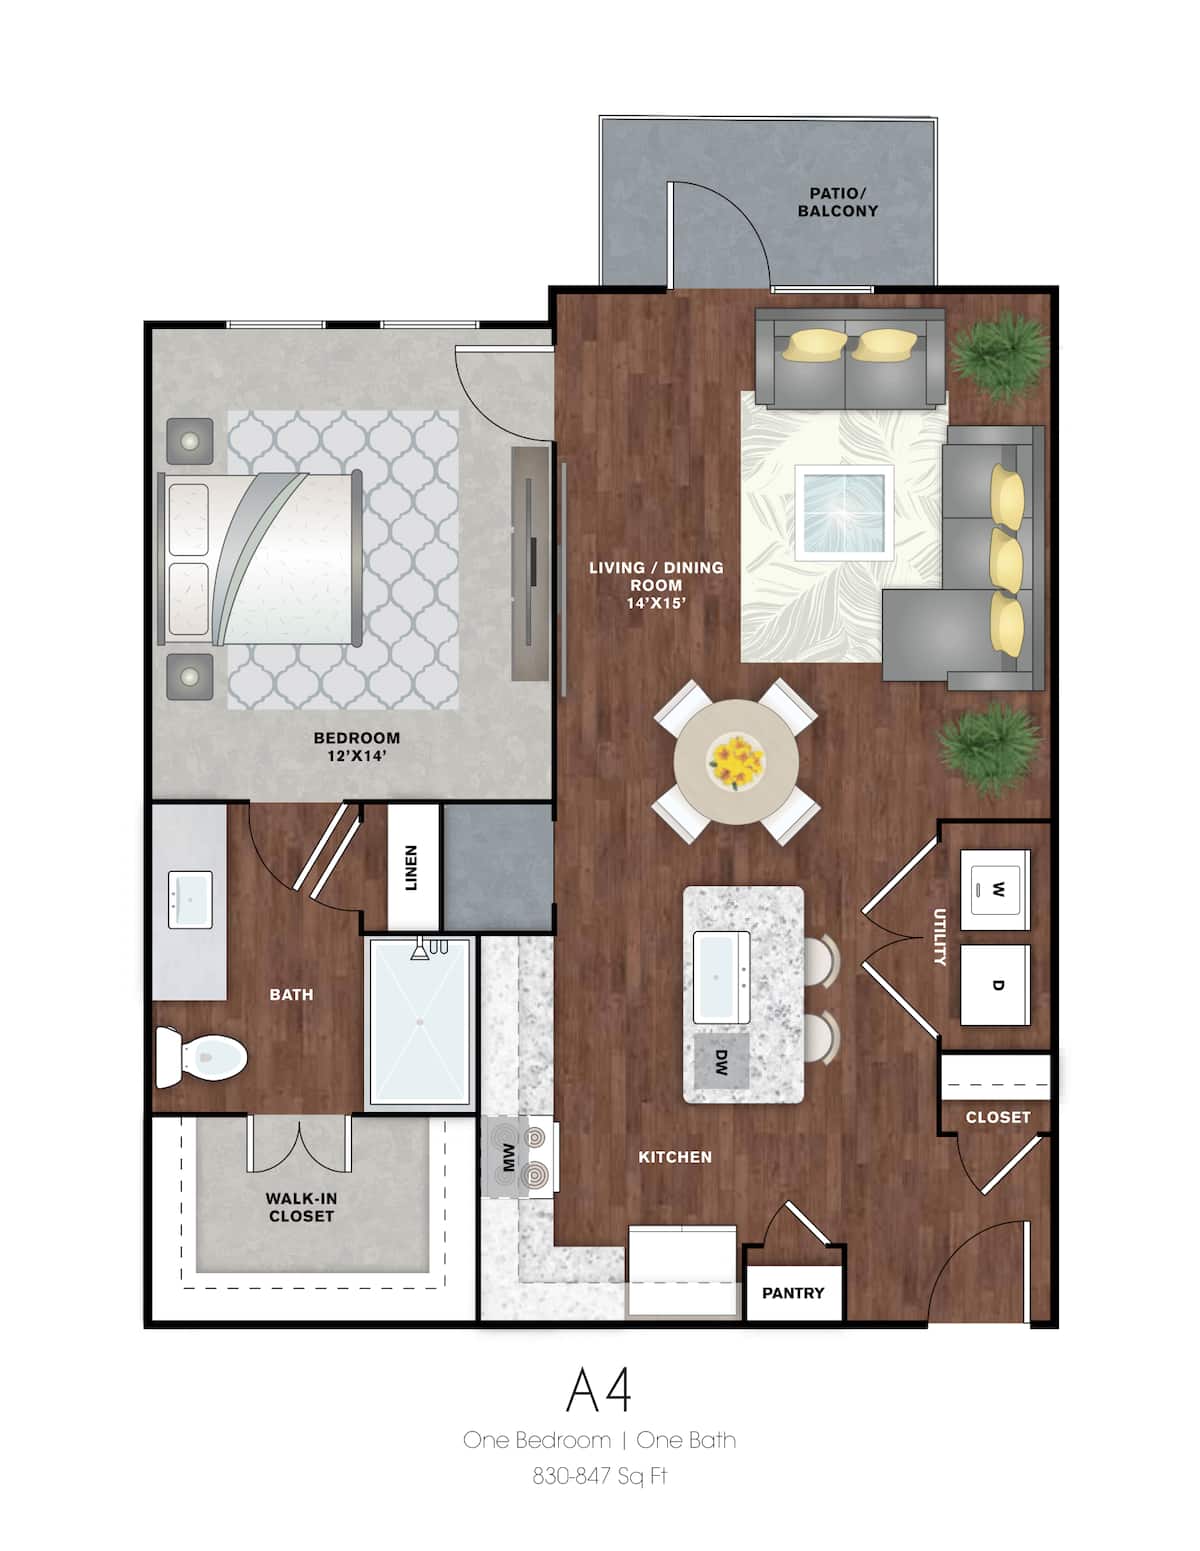 Floorplan diagram for A16, showing 1 bedroom